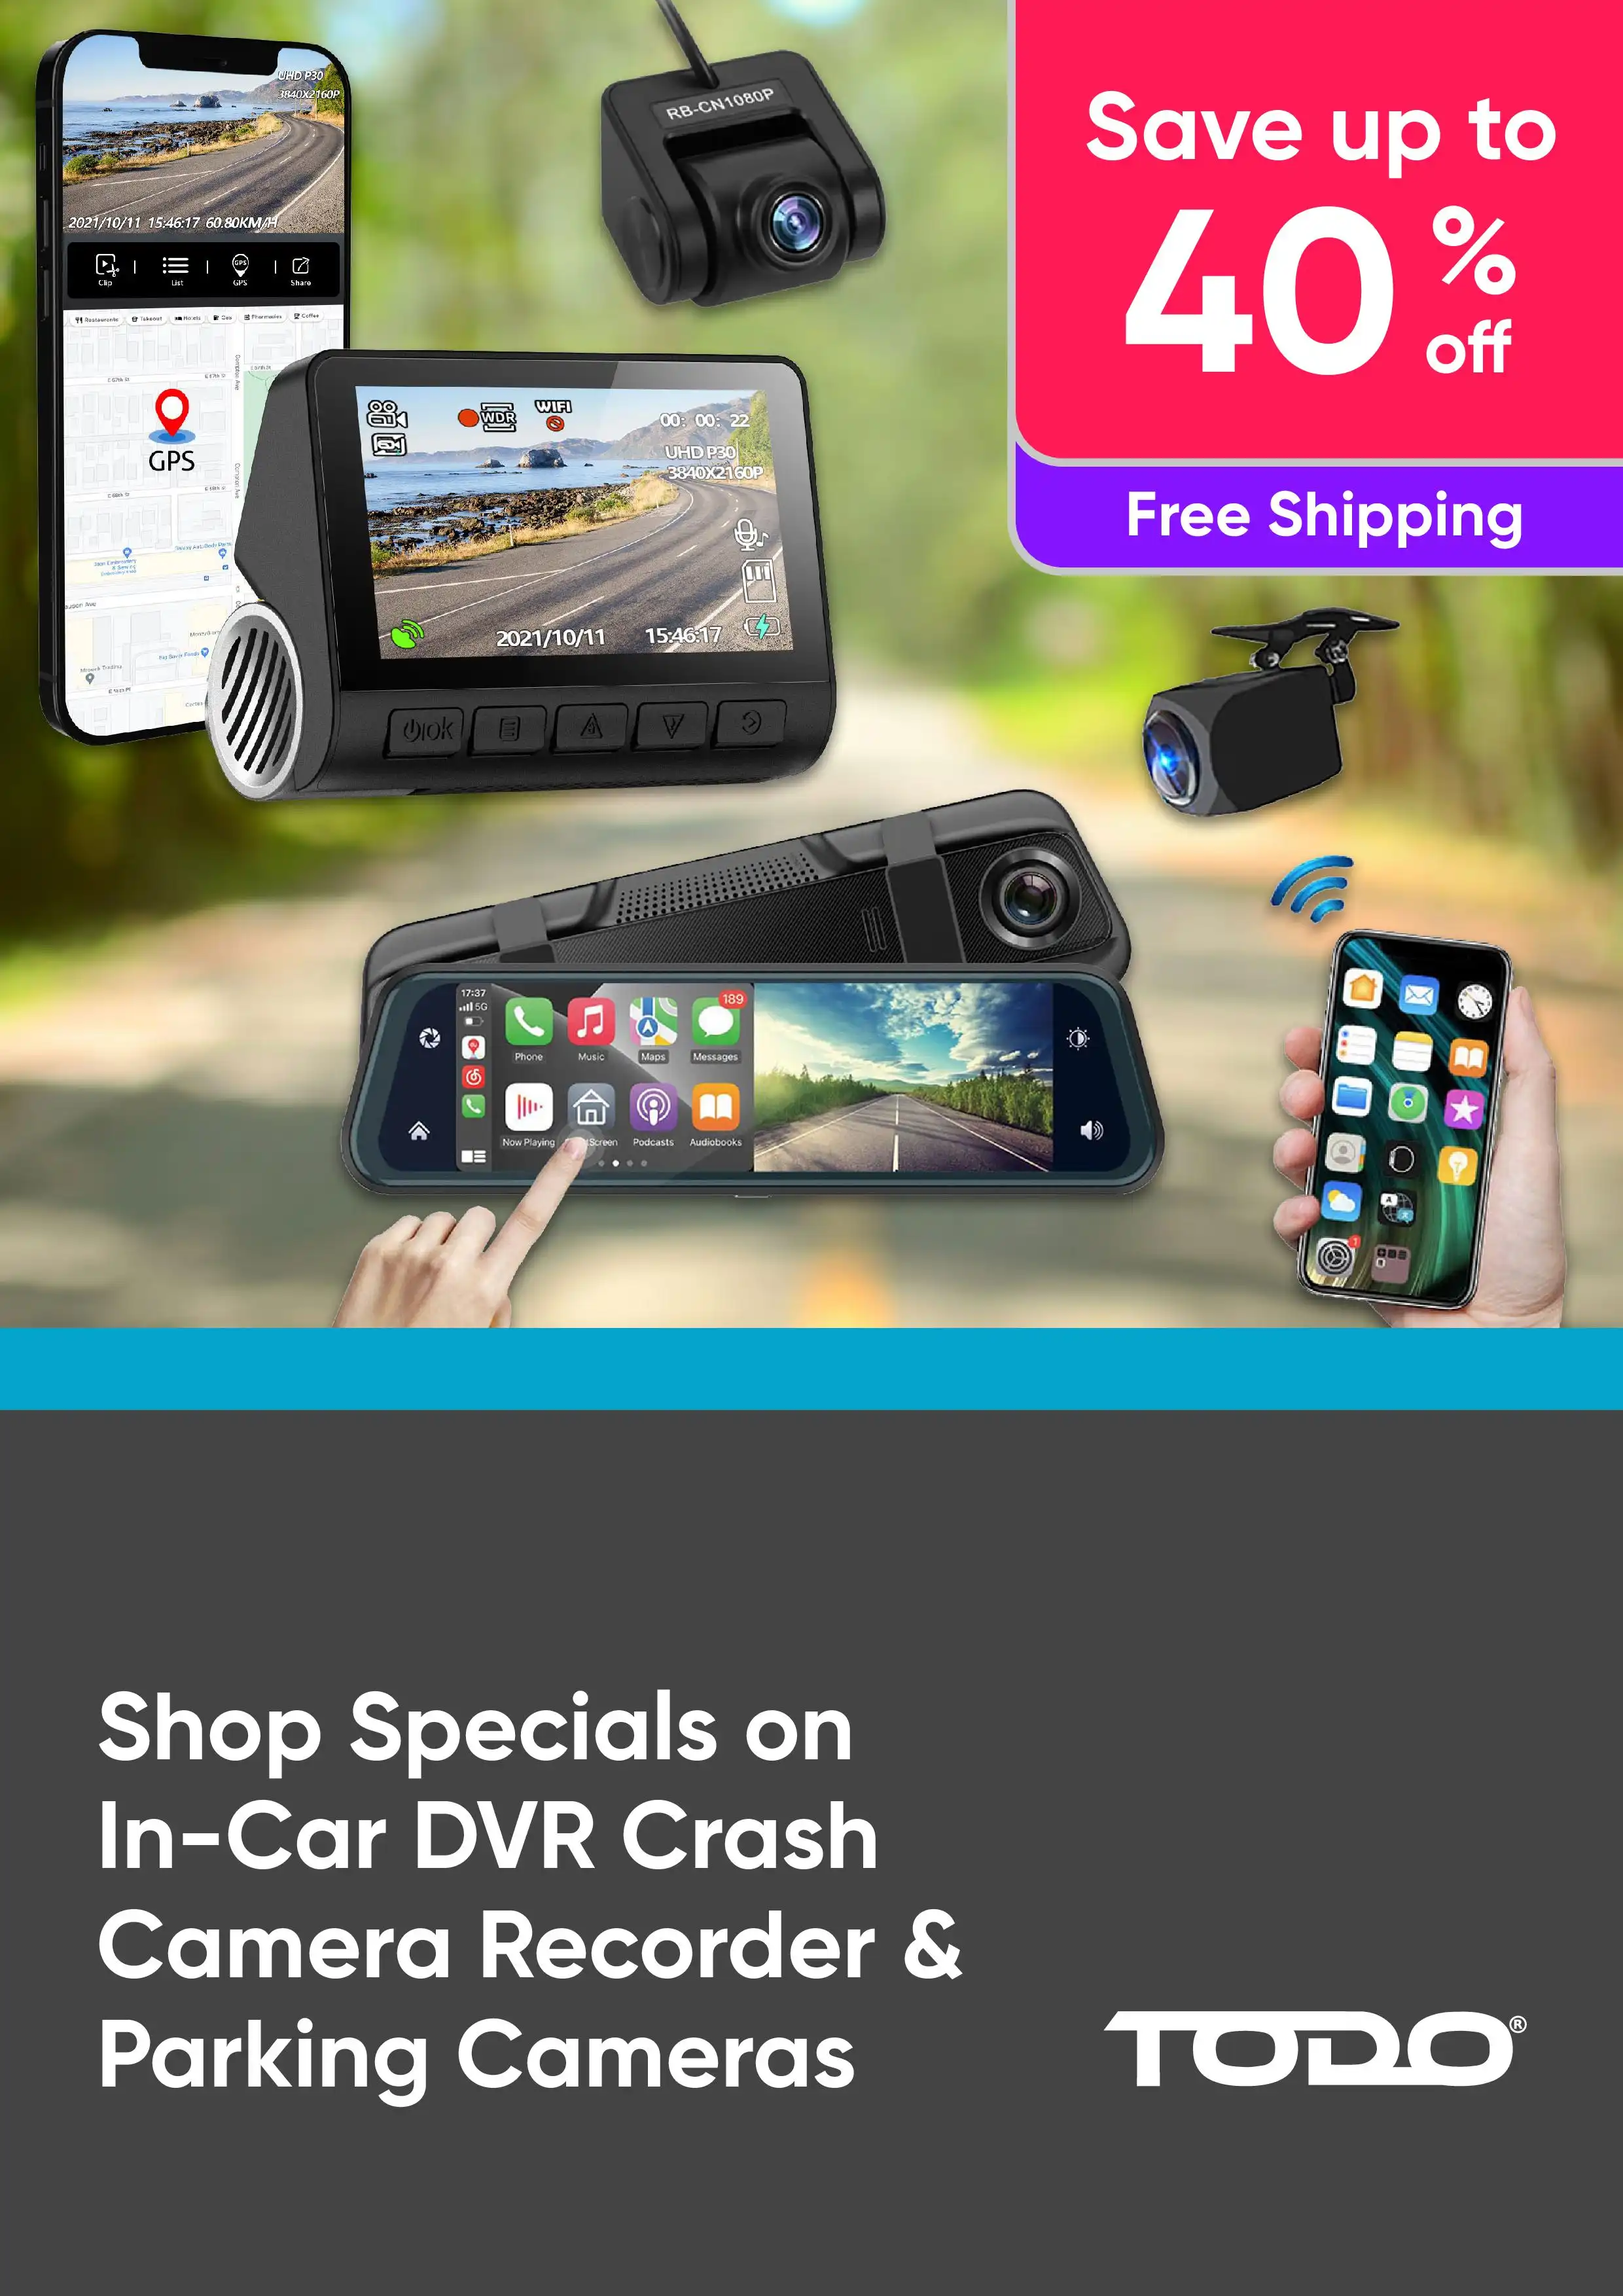 Shop Specials on In-Car DVR Crash Camera Recorder & Parking Cameras - Save Up to 40% Off RRP